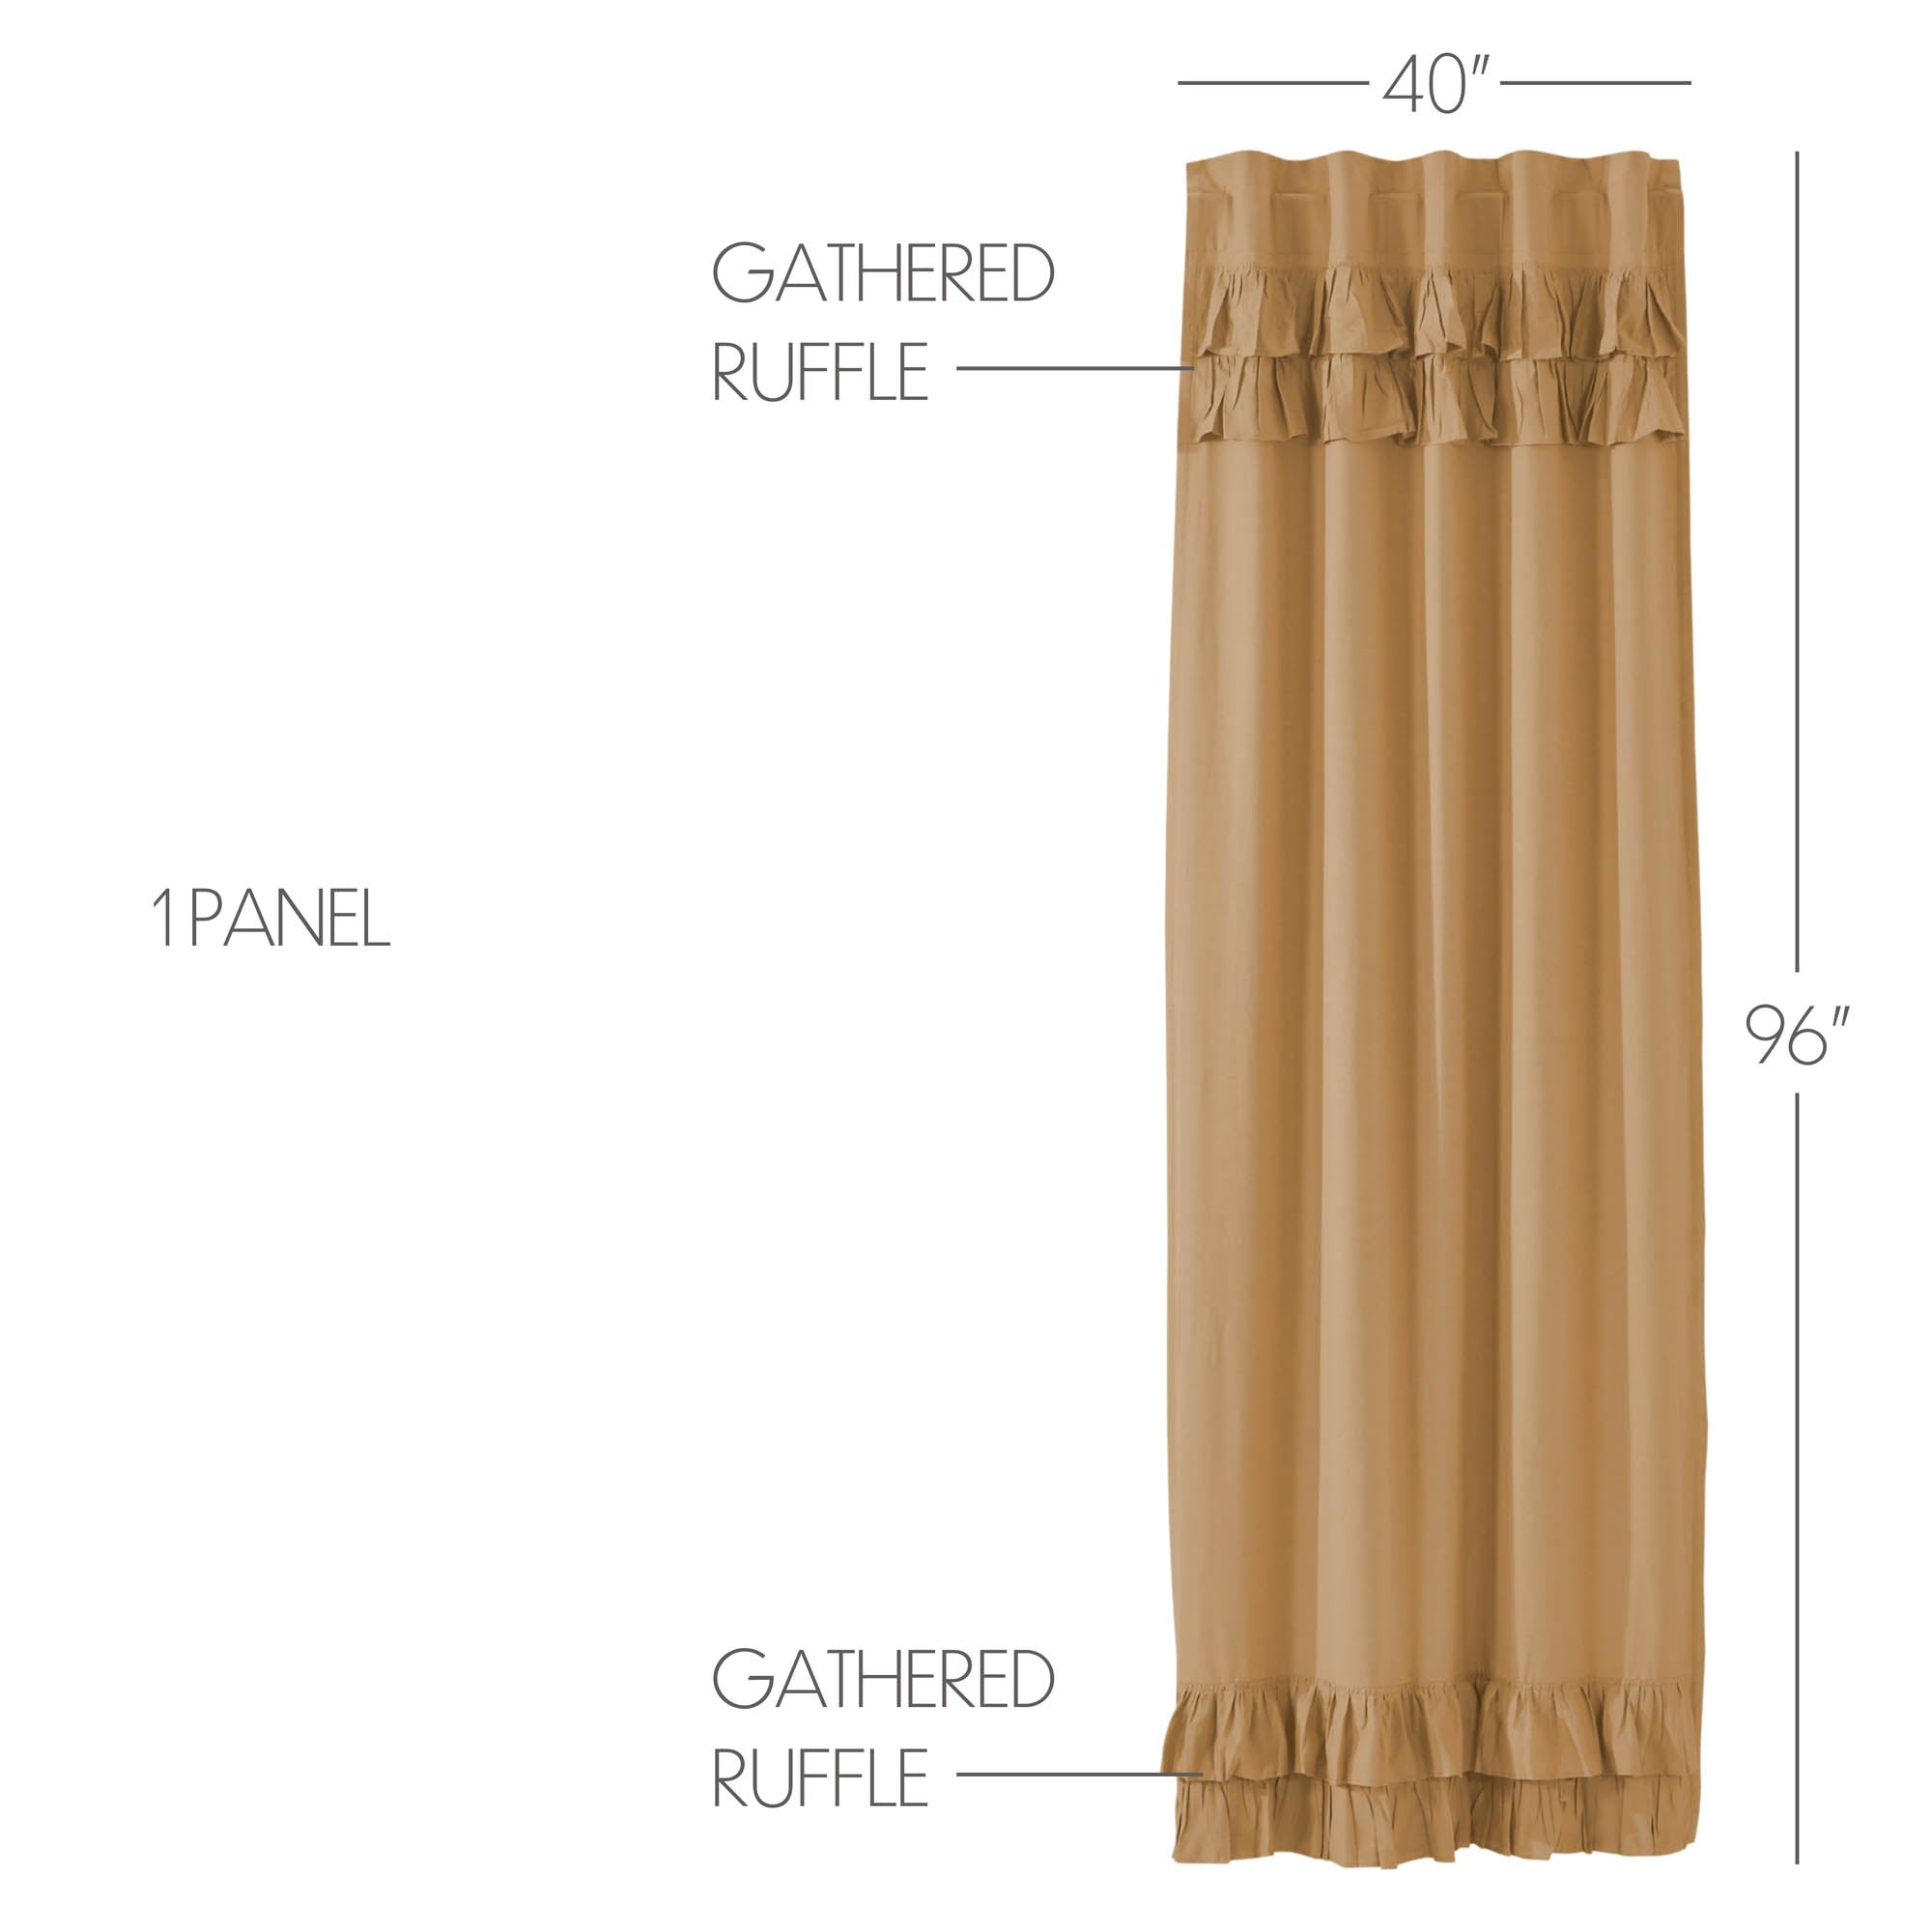 Simple Life Flax Khaki Ruffled Panel Curtain 96"x40" VHC Brands